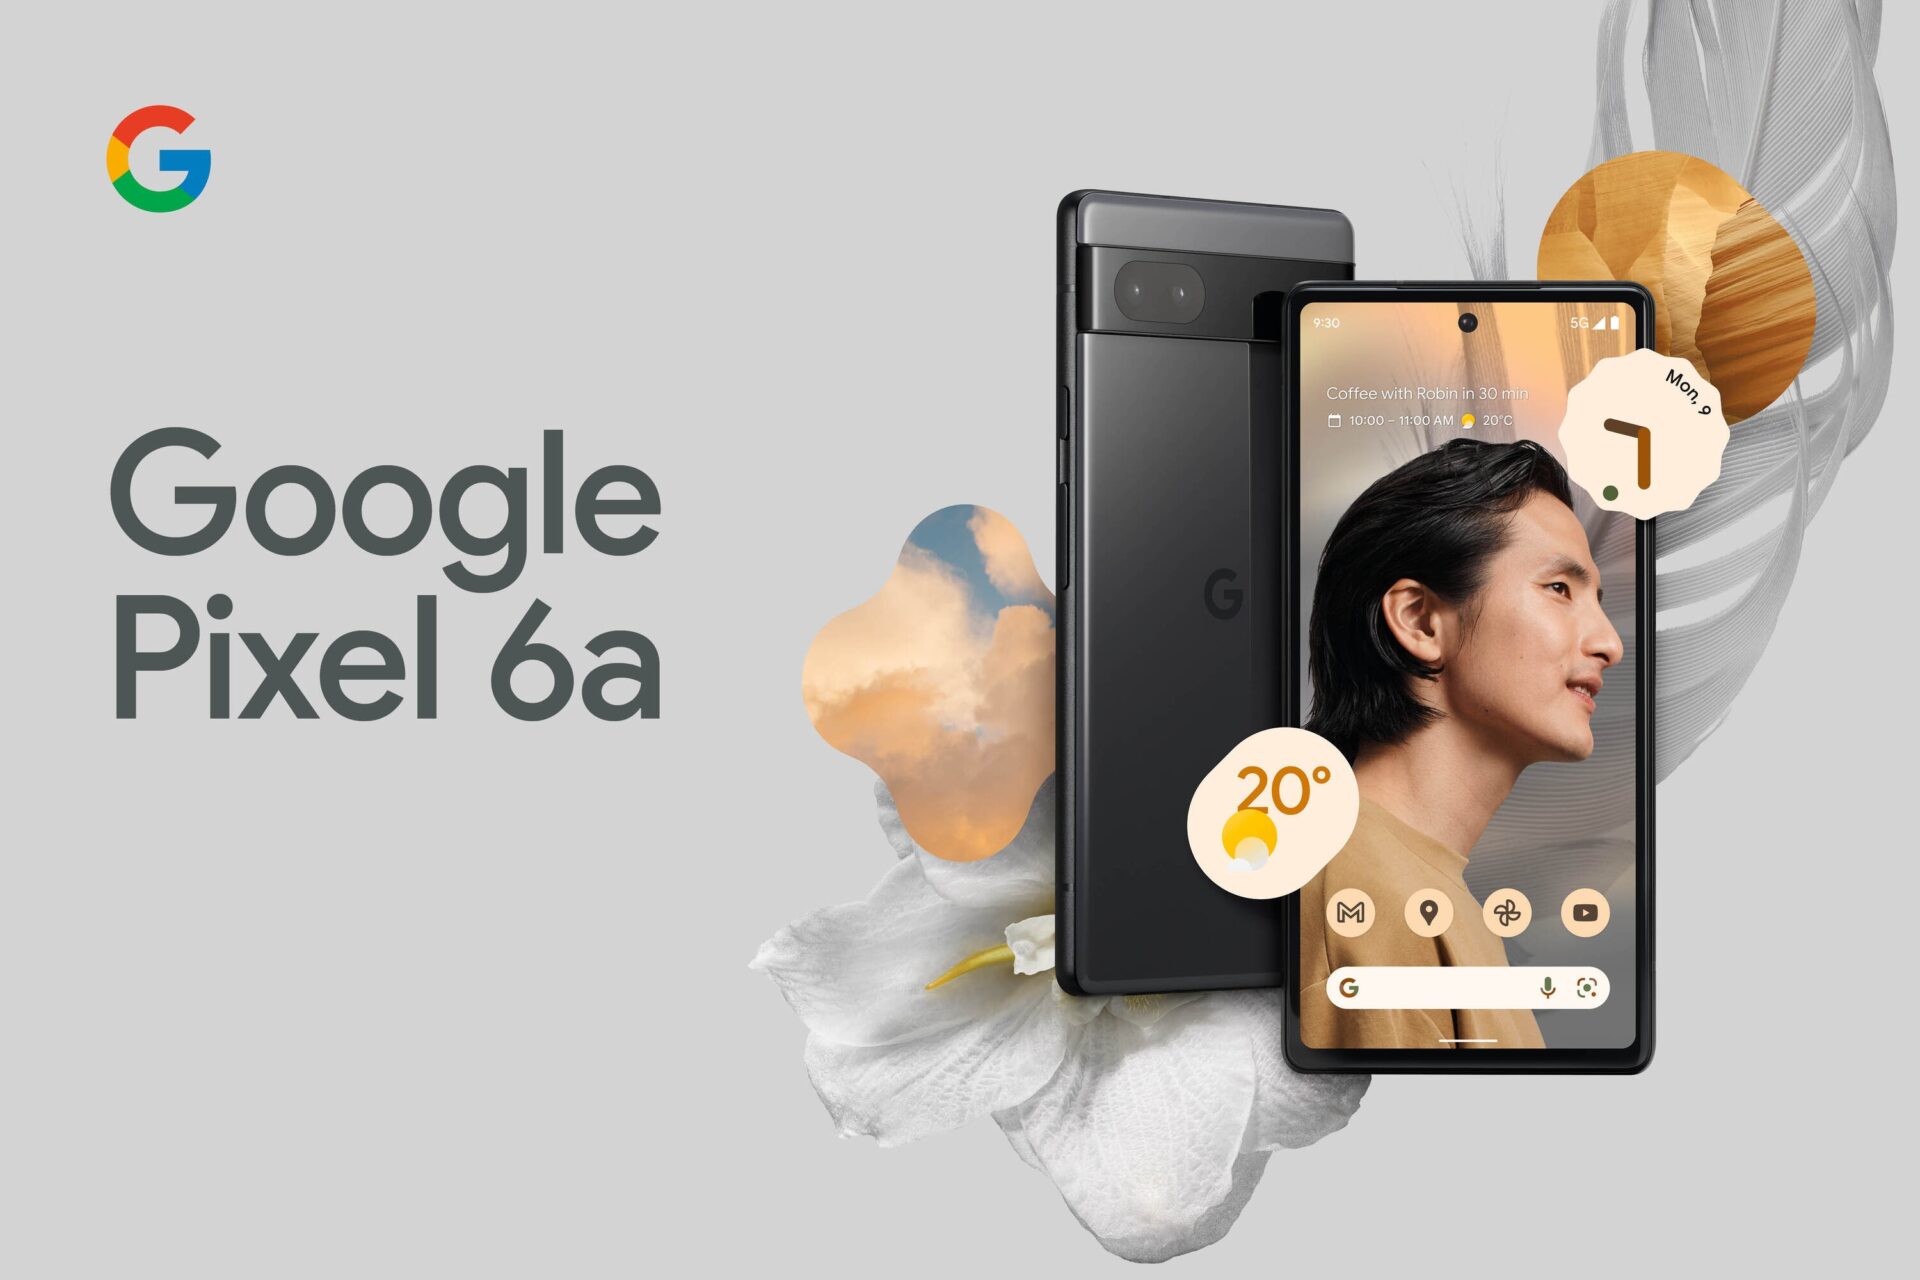 google pixel 6a promotional image